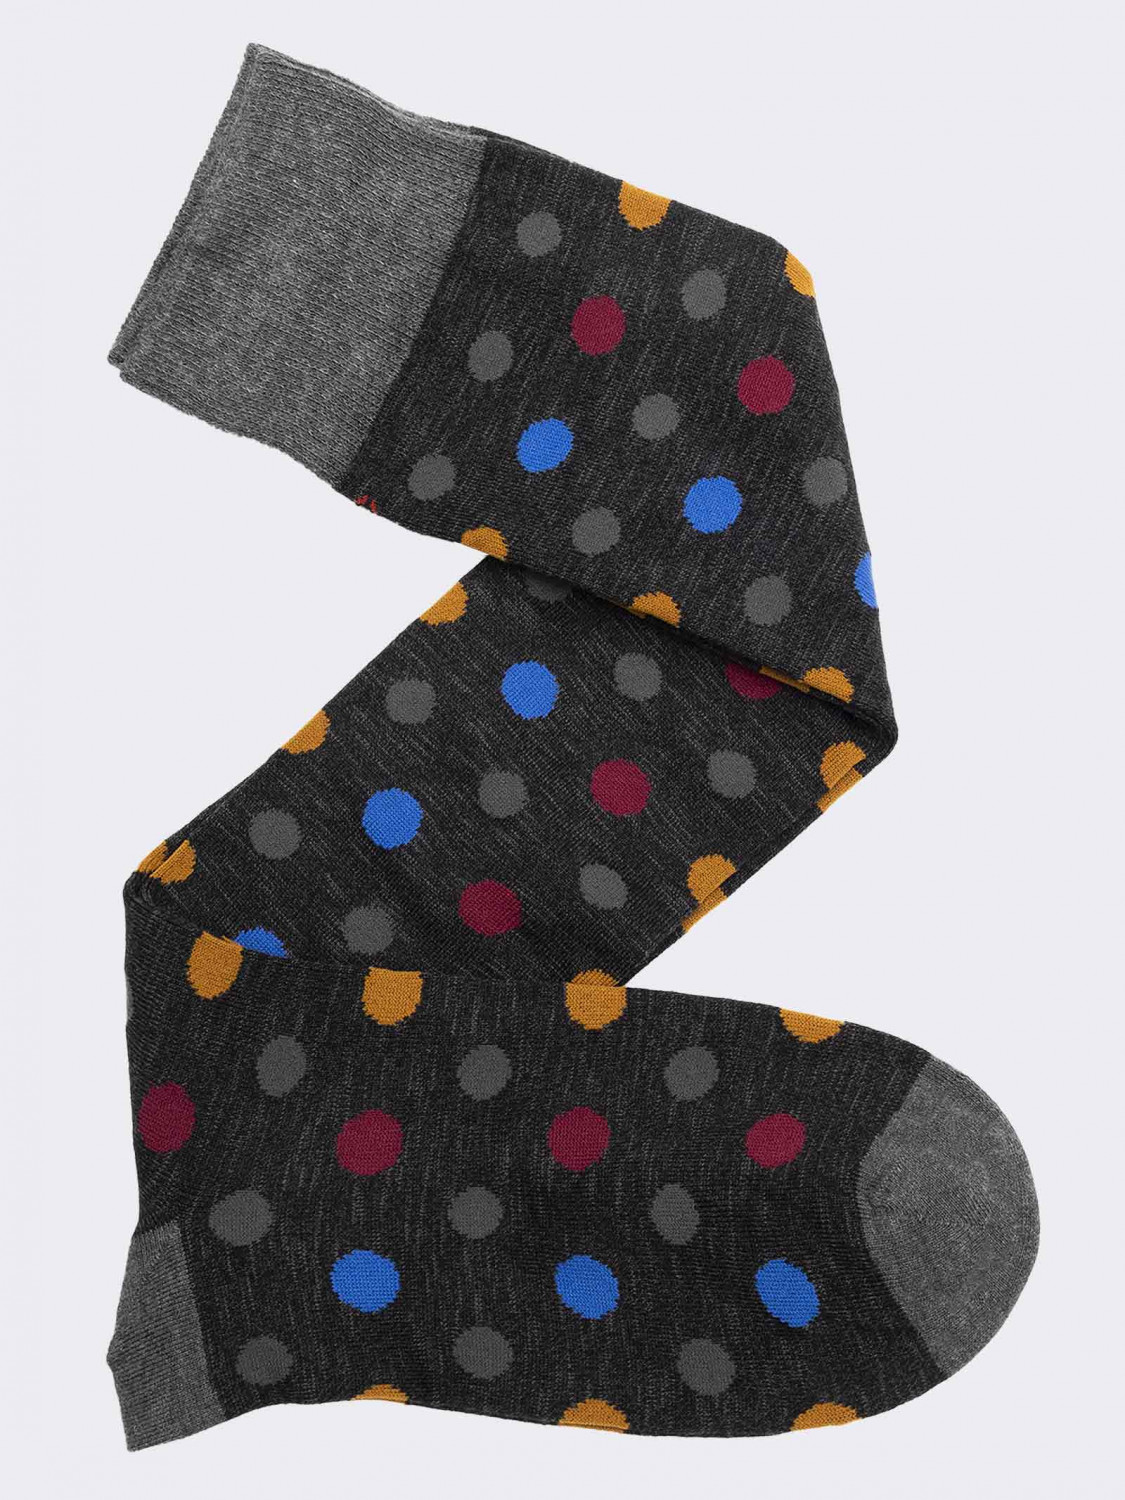 Men's knee-high polka dot patterned socks in warm cotton